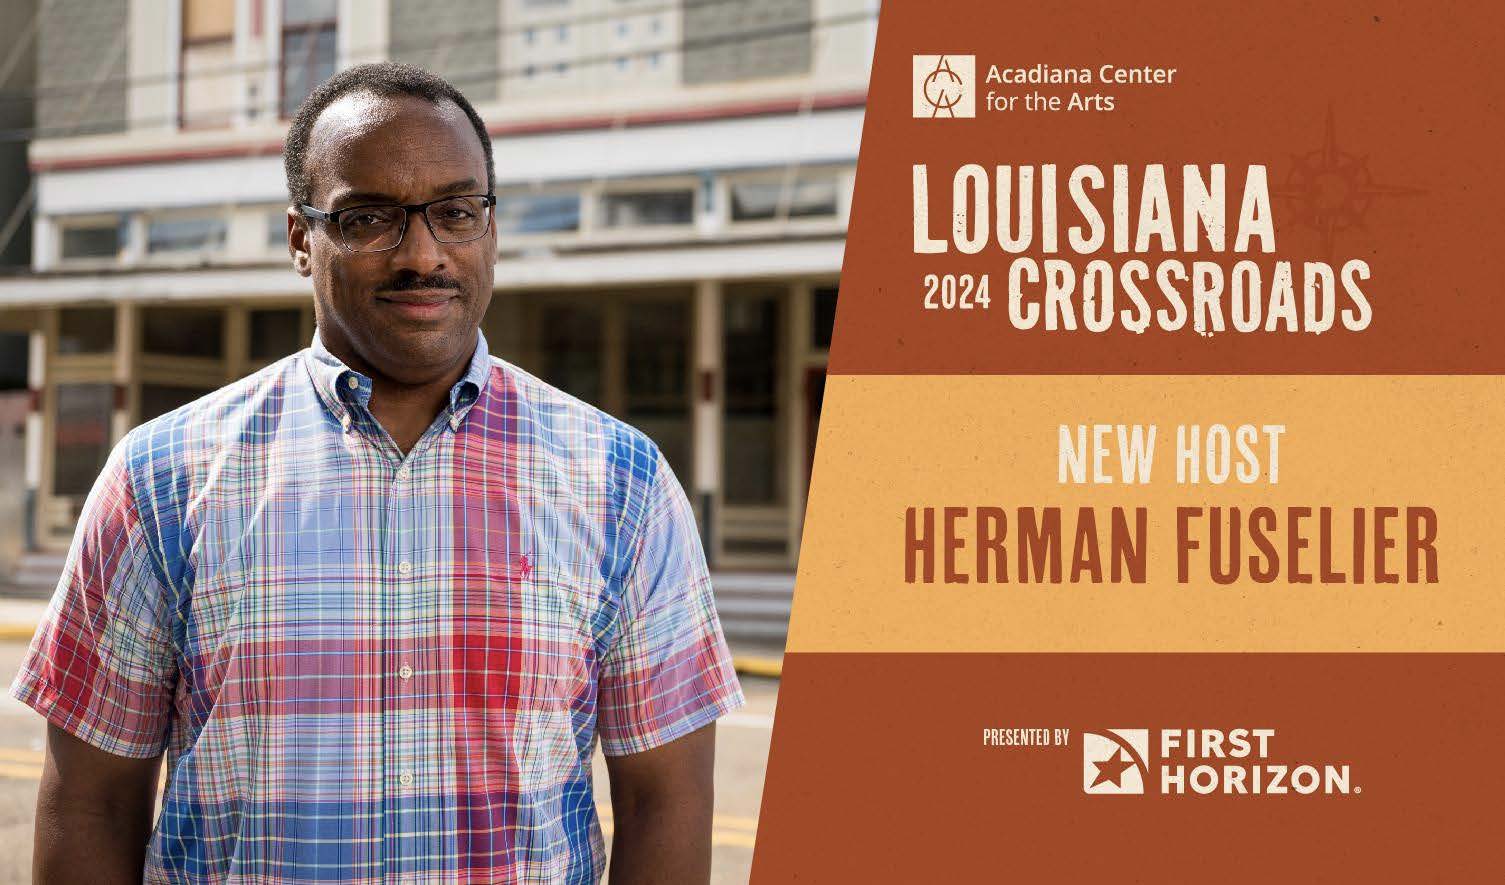 Herman Fuselier takes the mic as new host of Louisiana Crossroads